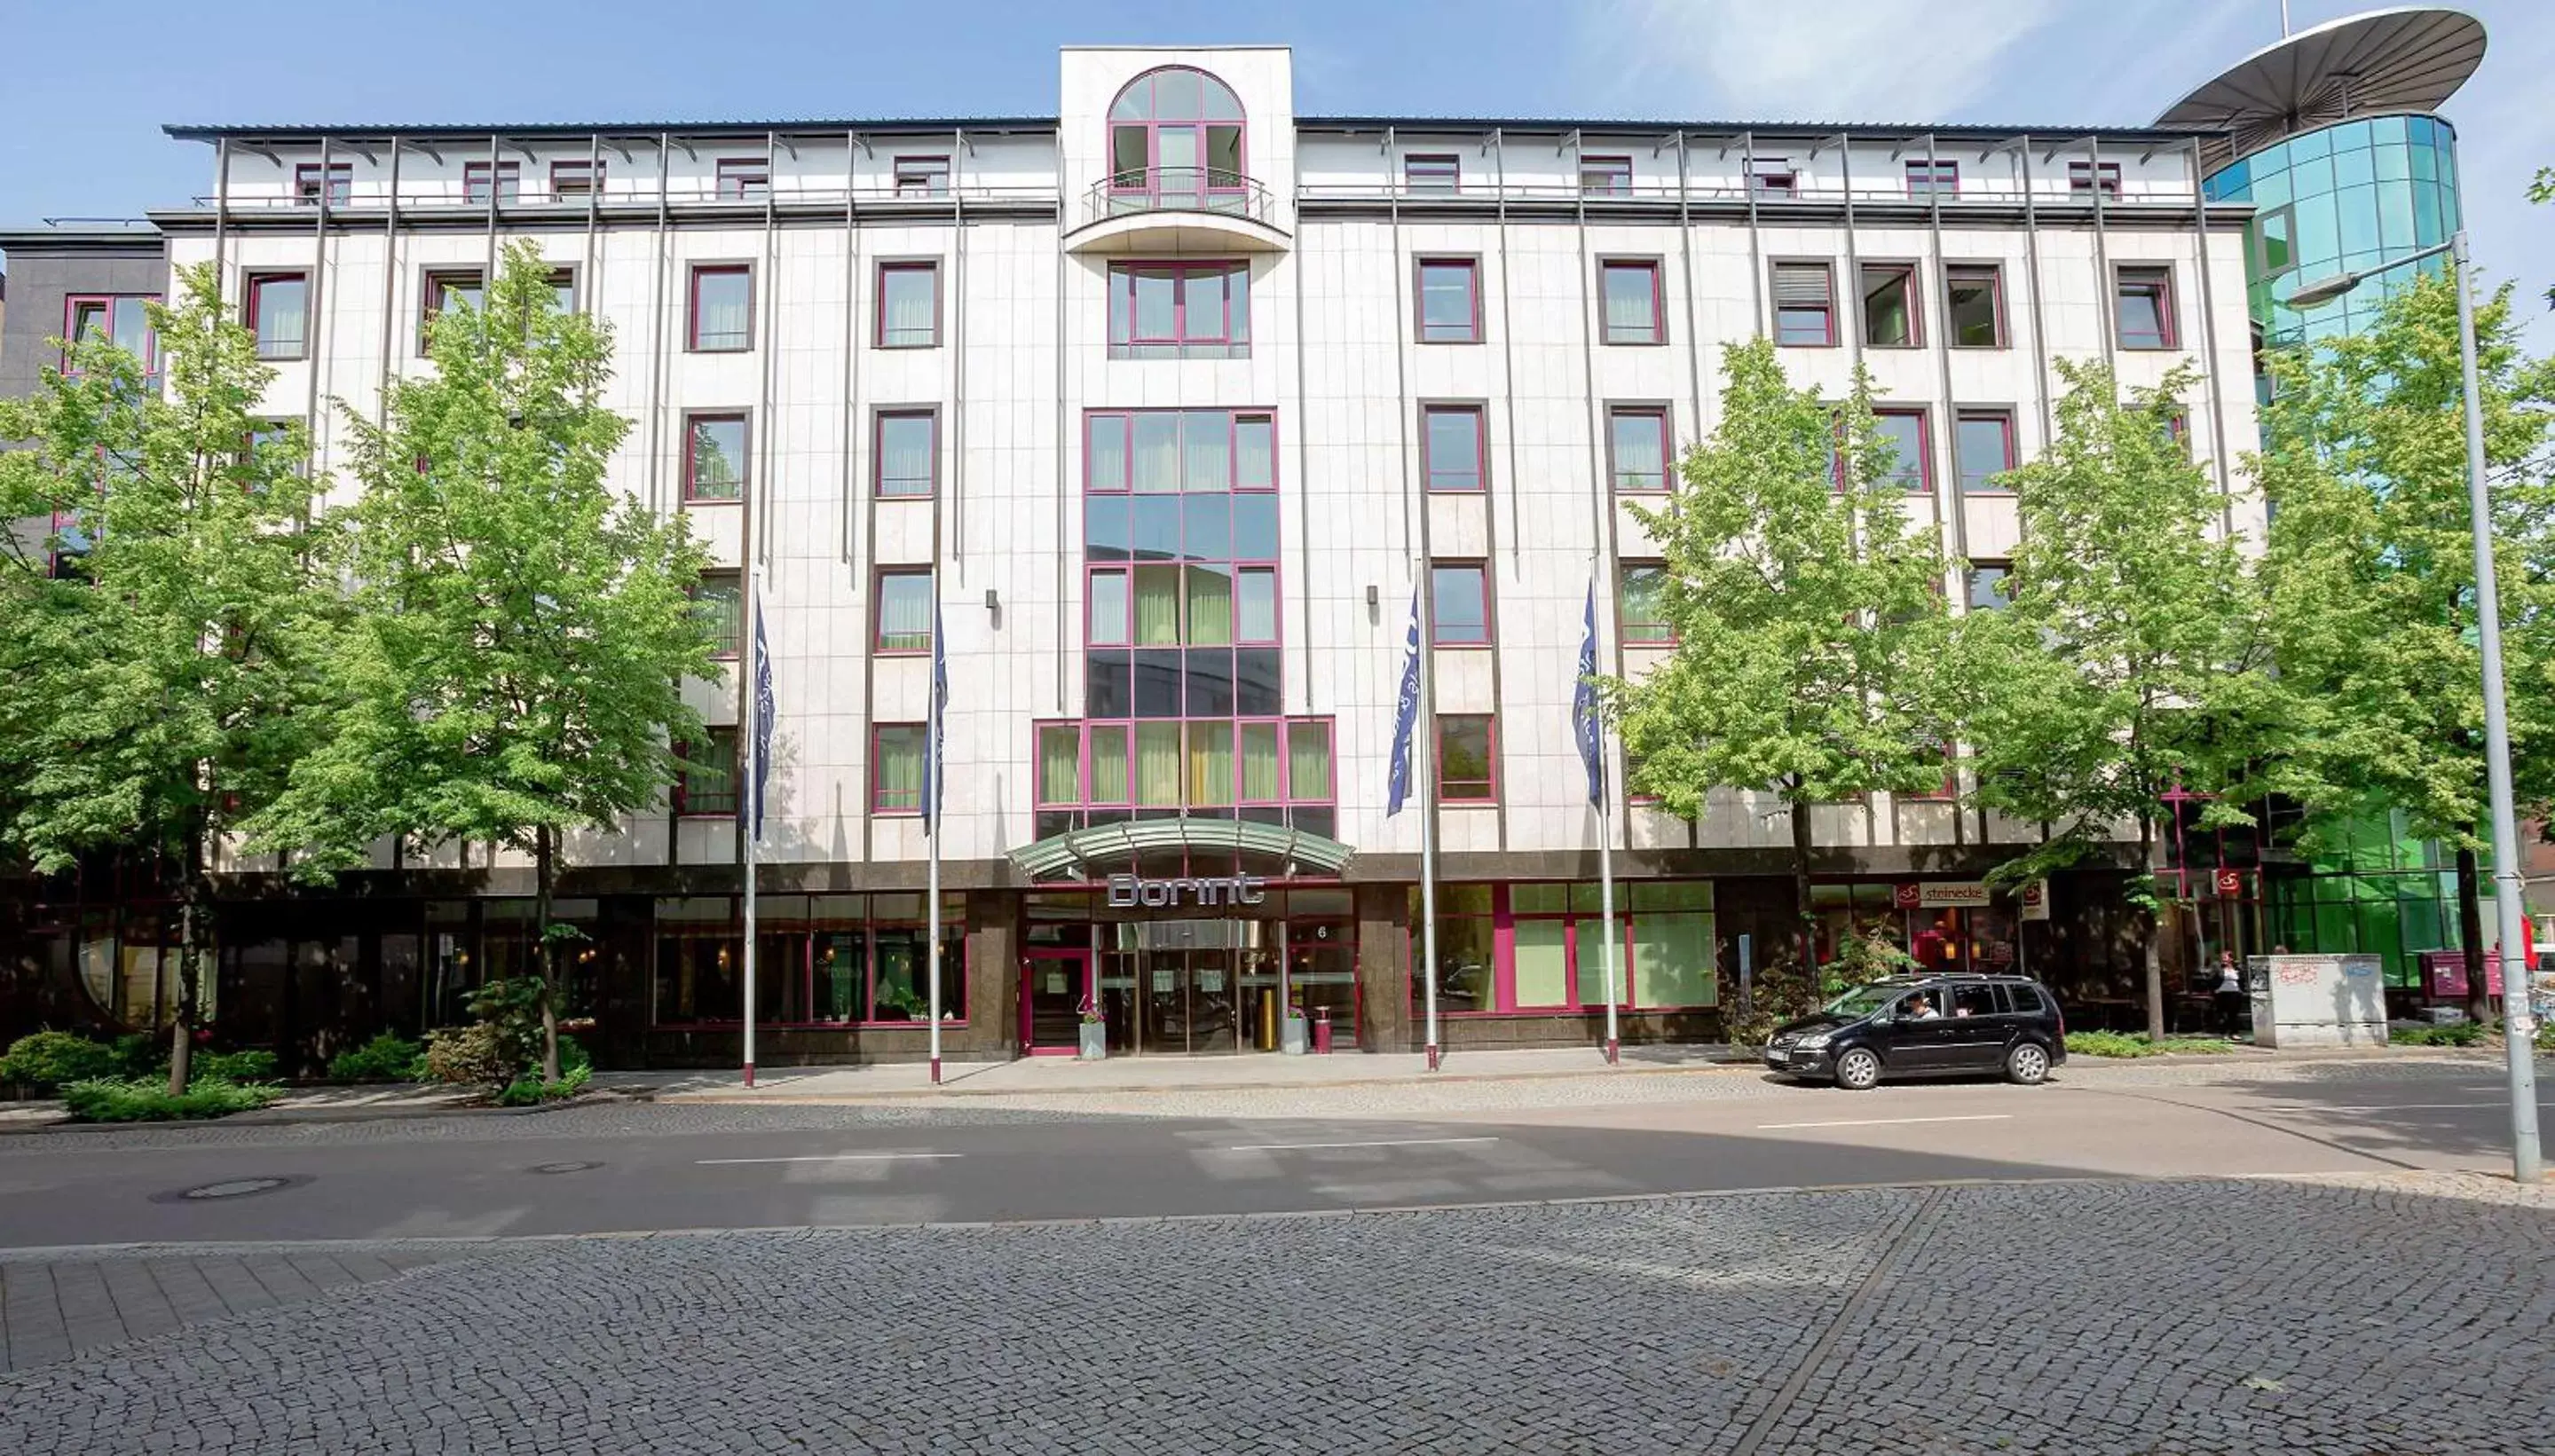 Property Building in Dorint Hotel Leipzig